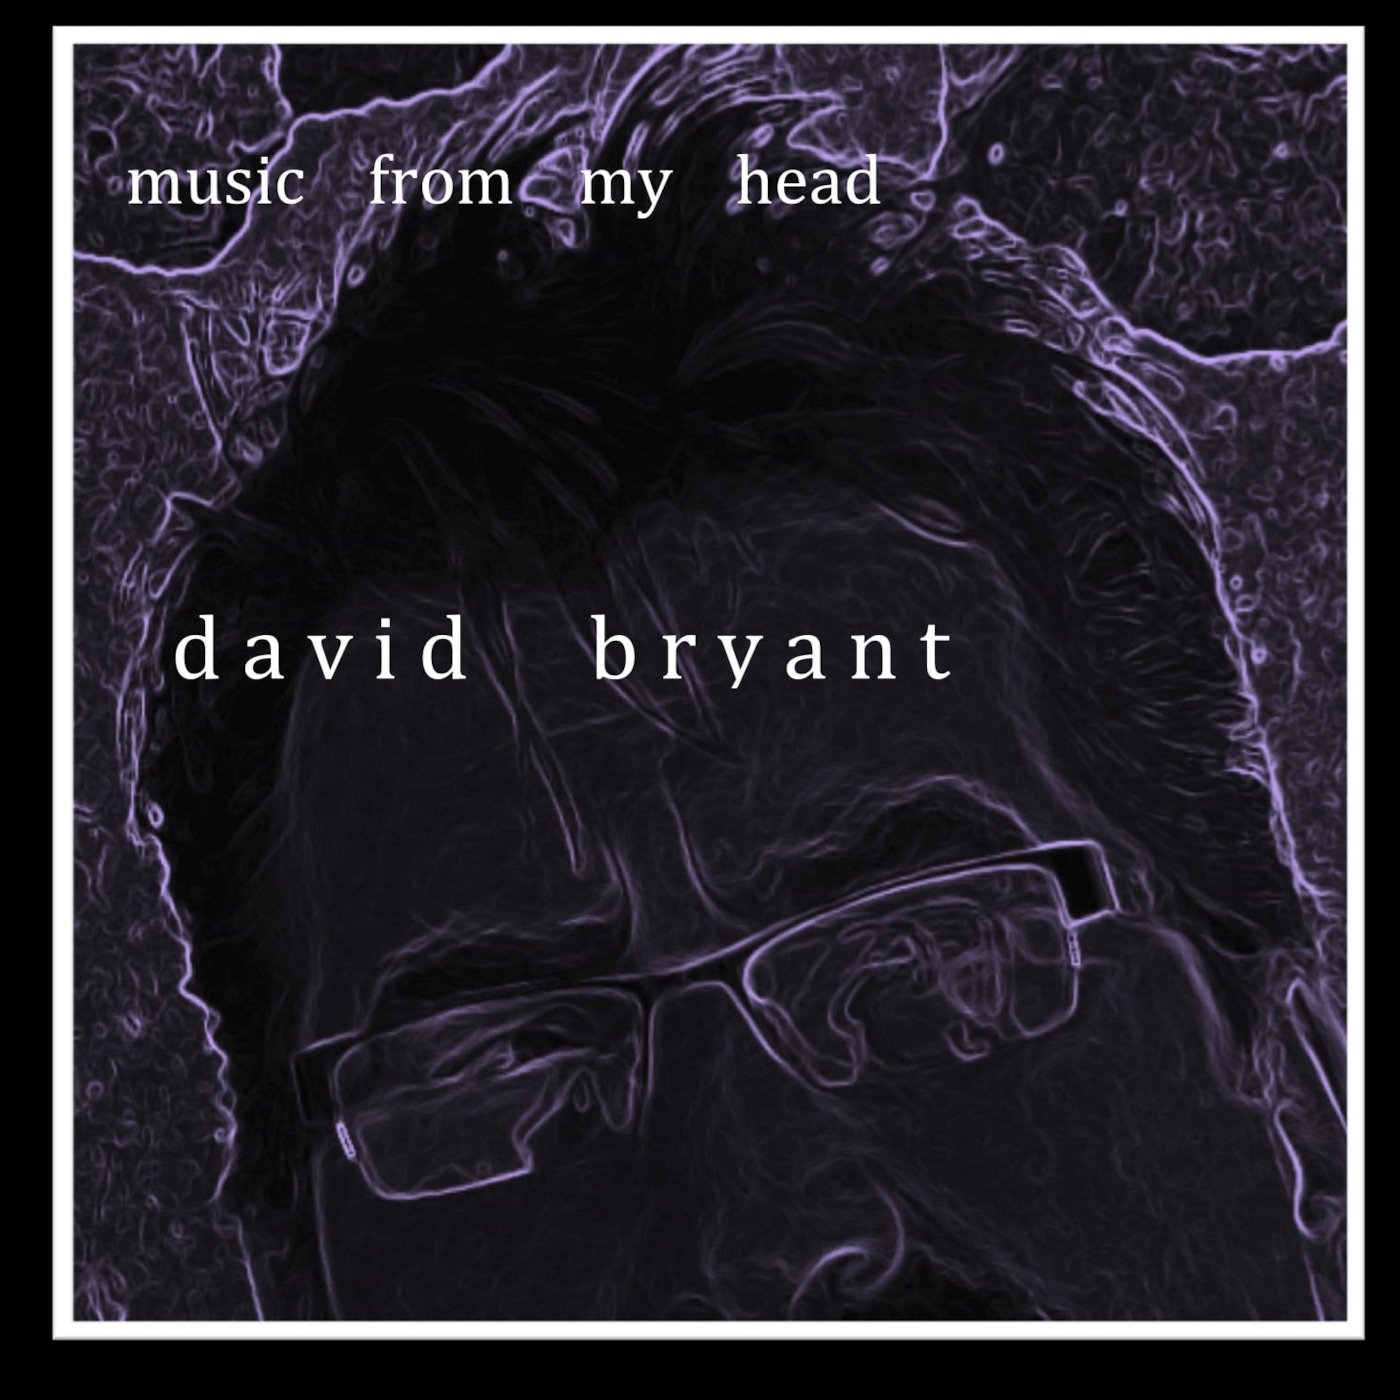 david bryant - music from my head